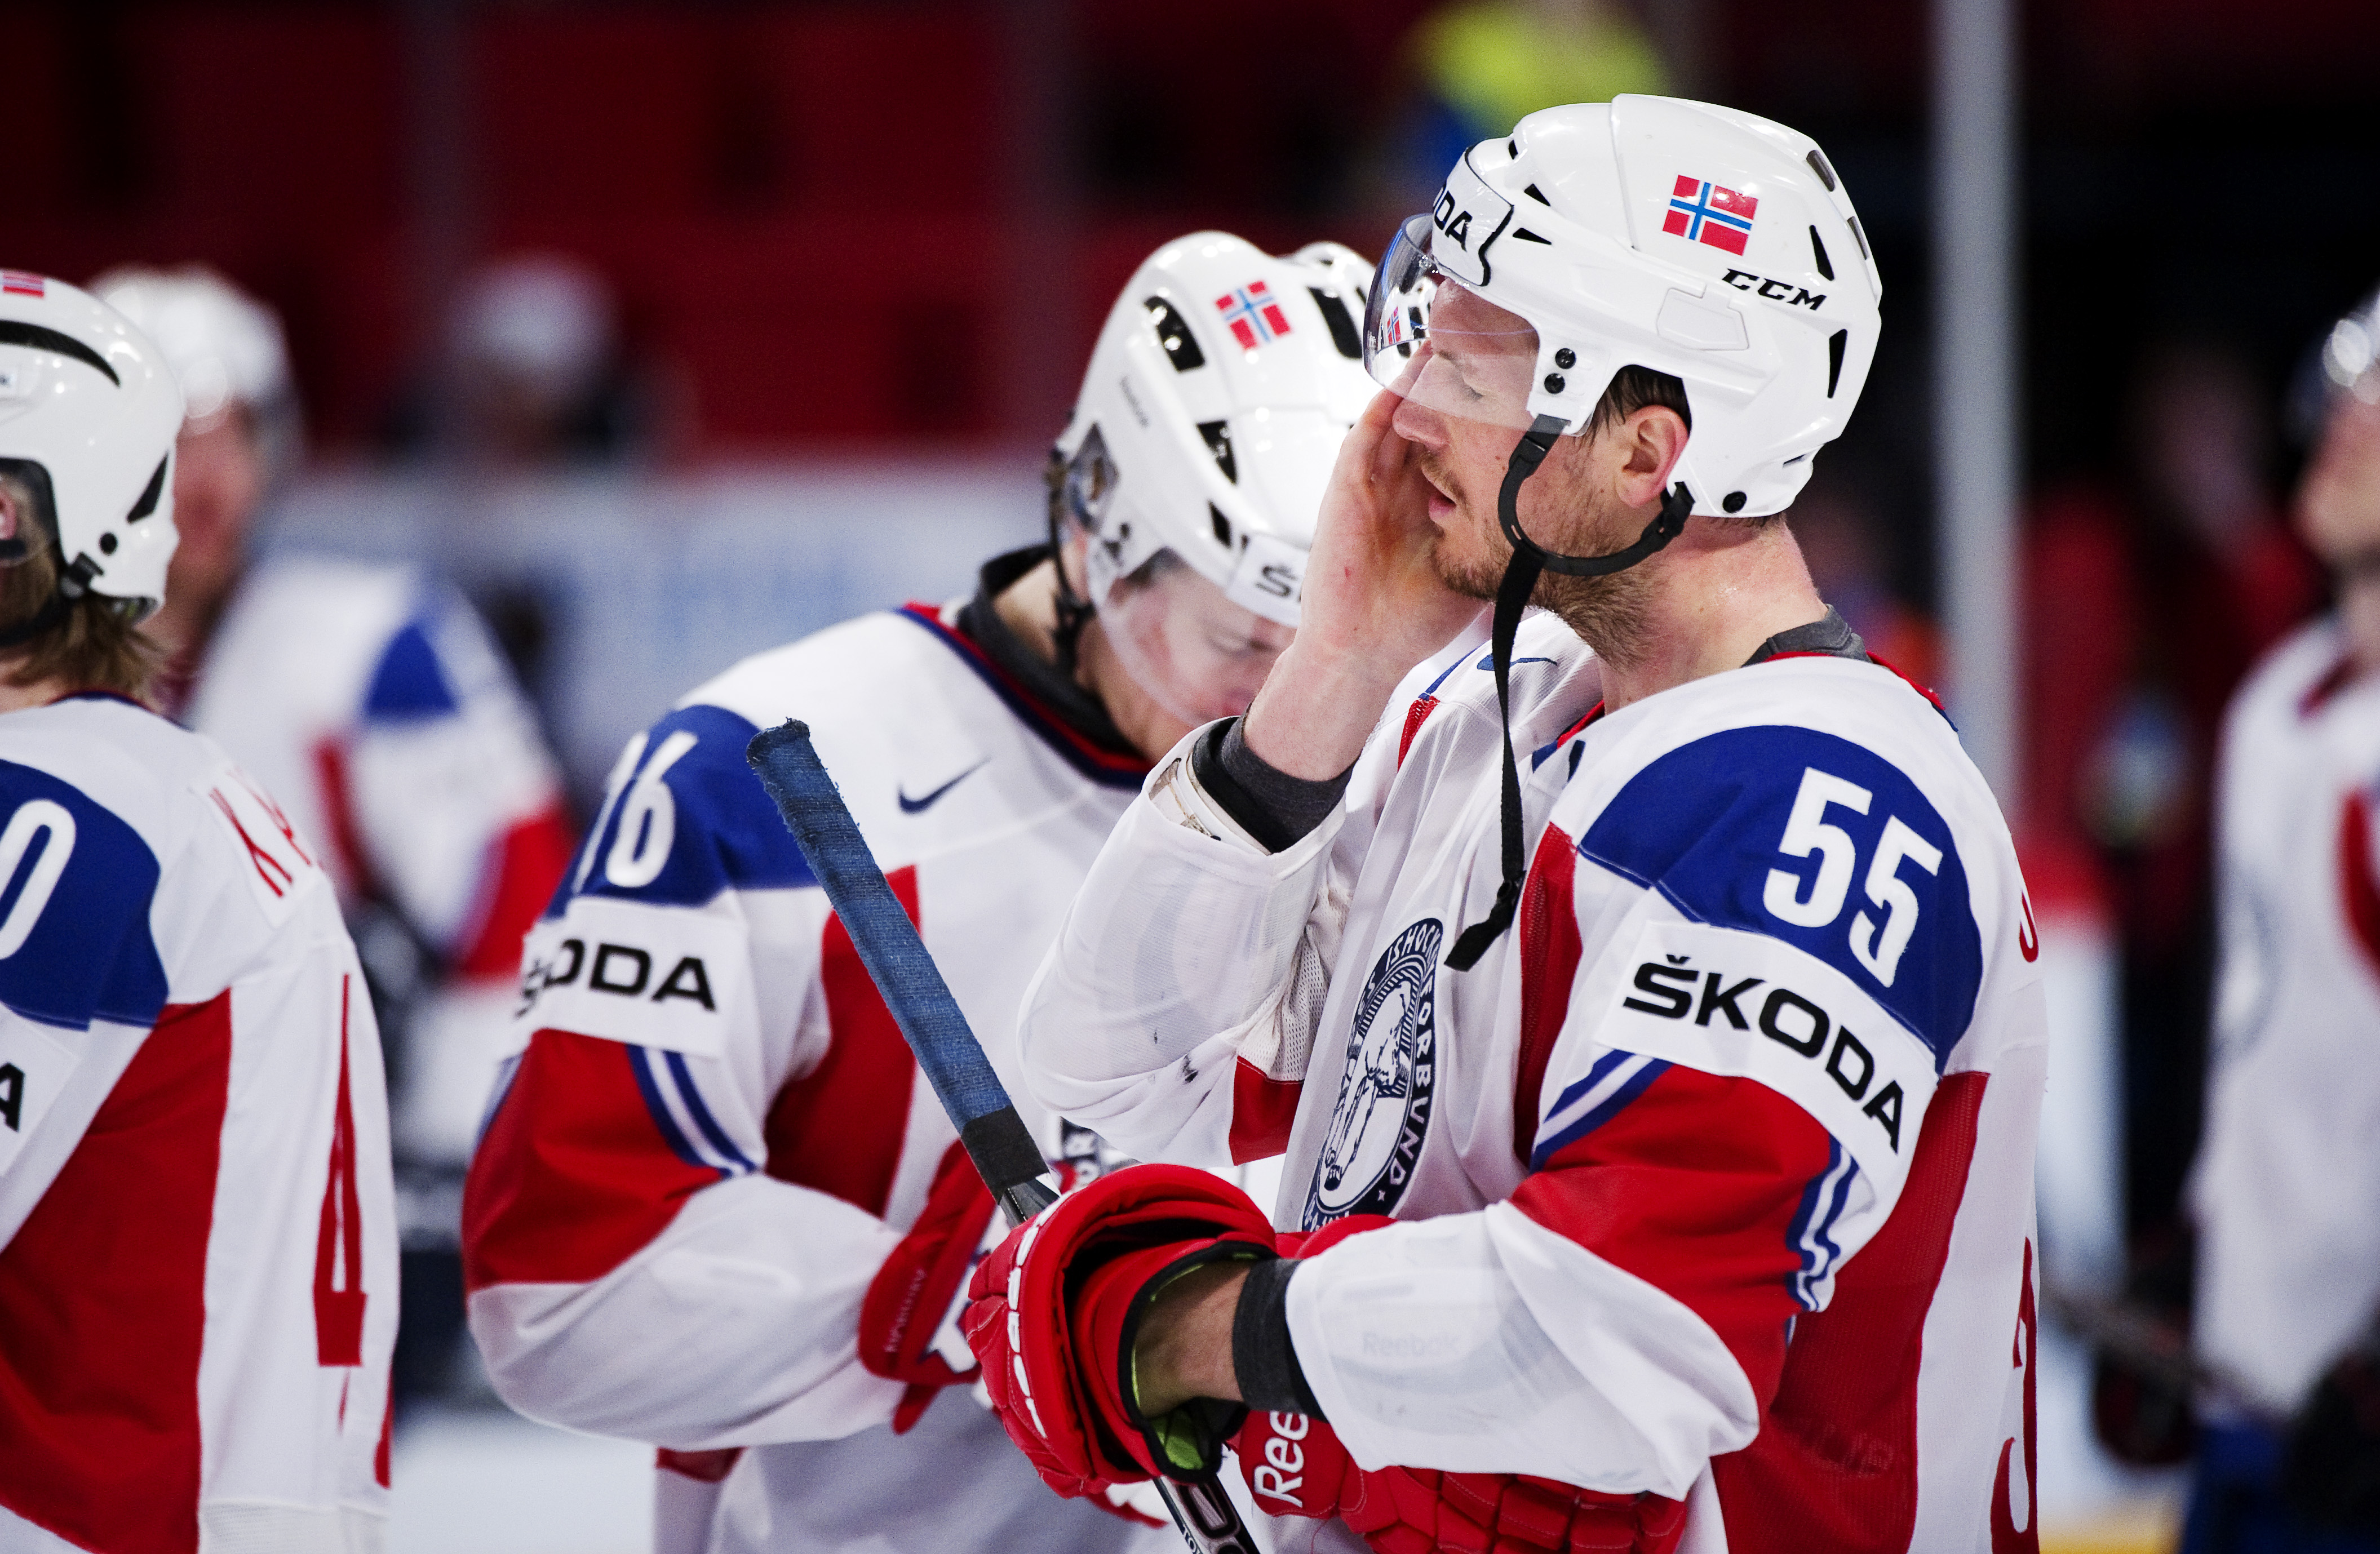 ishockey, Norge, Ole-Kristian Tollefsen, Ryssland, VM